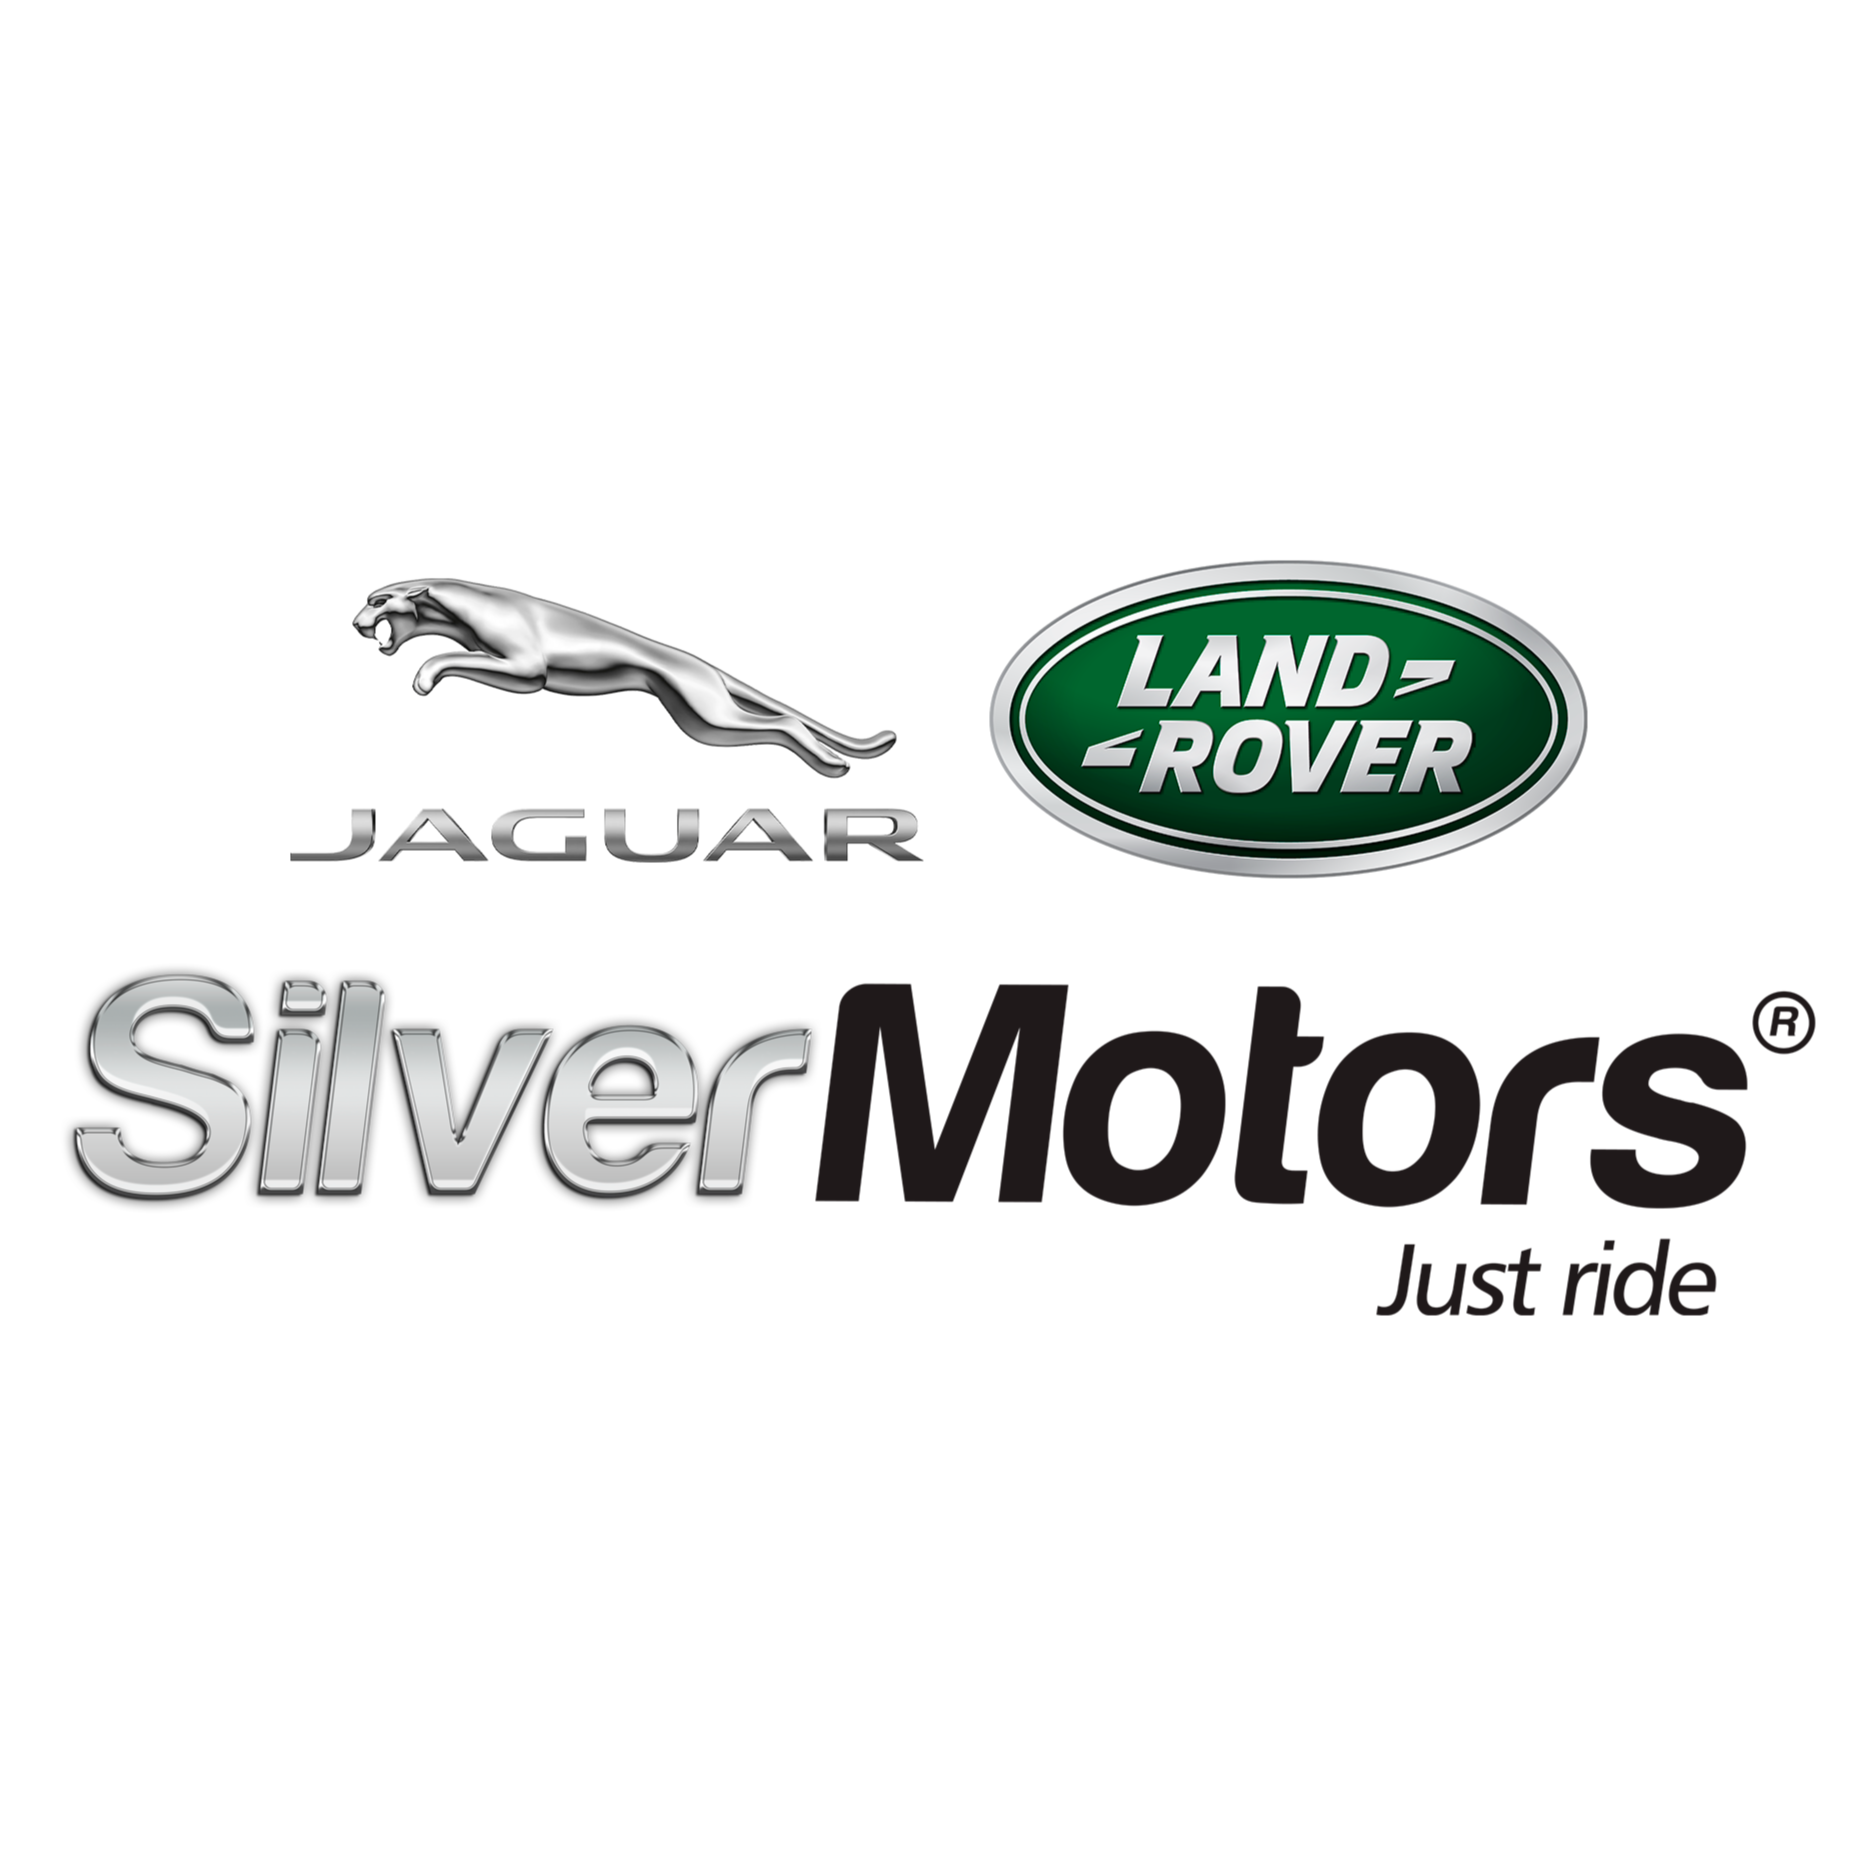 Jaguar Silver Motors Logo